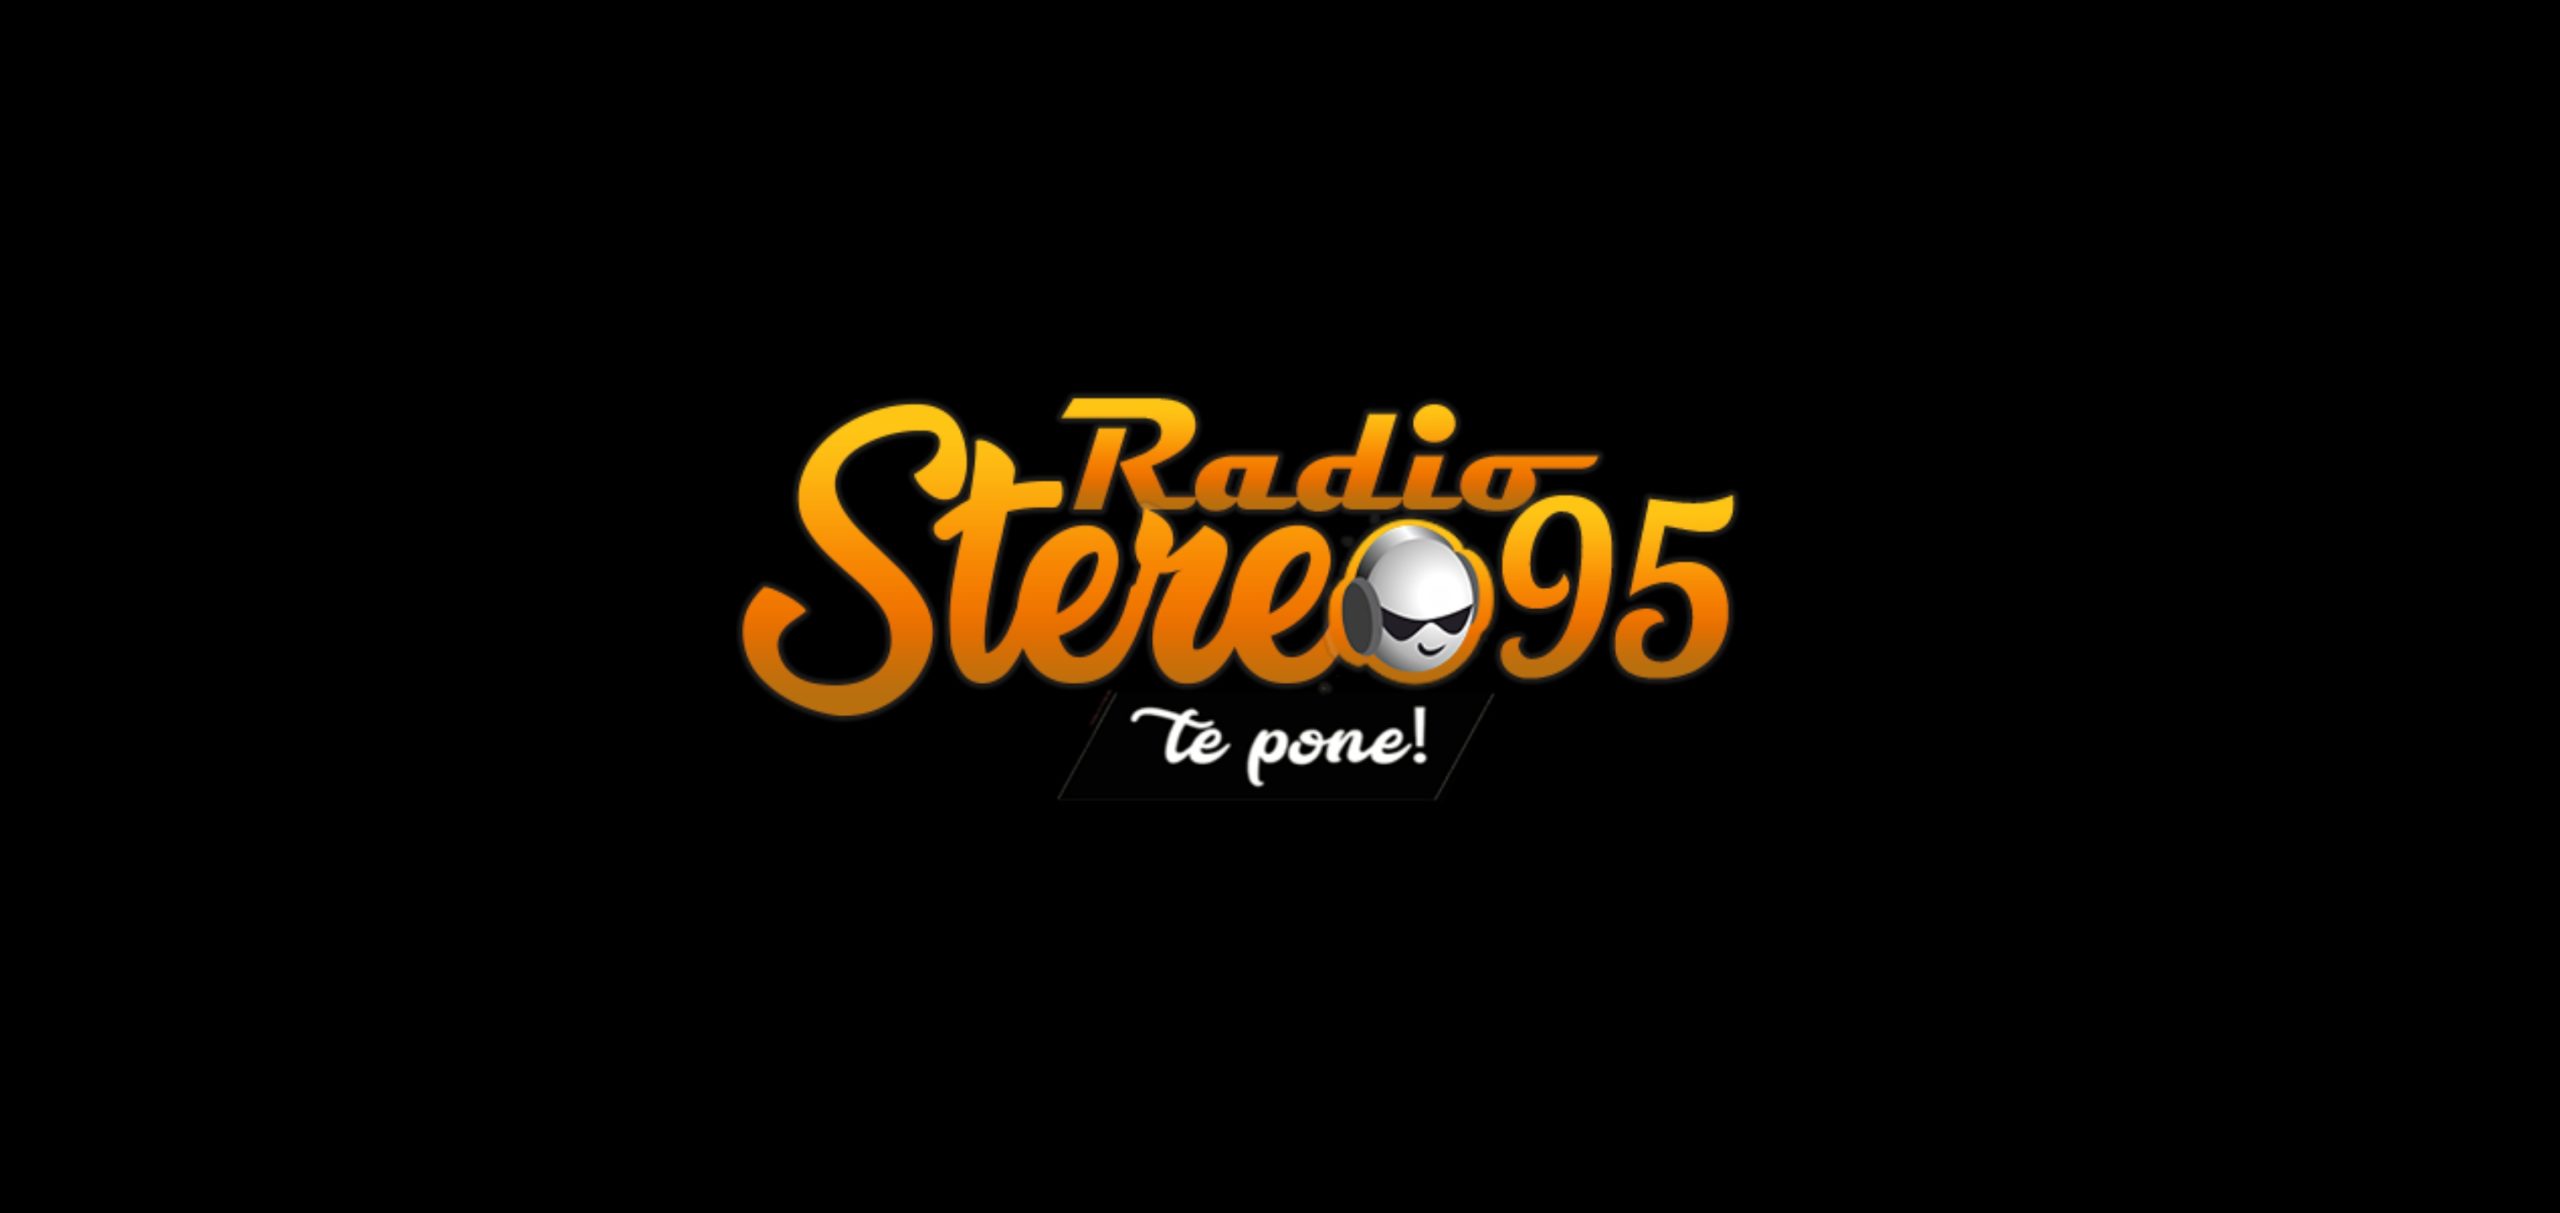 Radio stereo 95